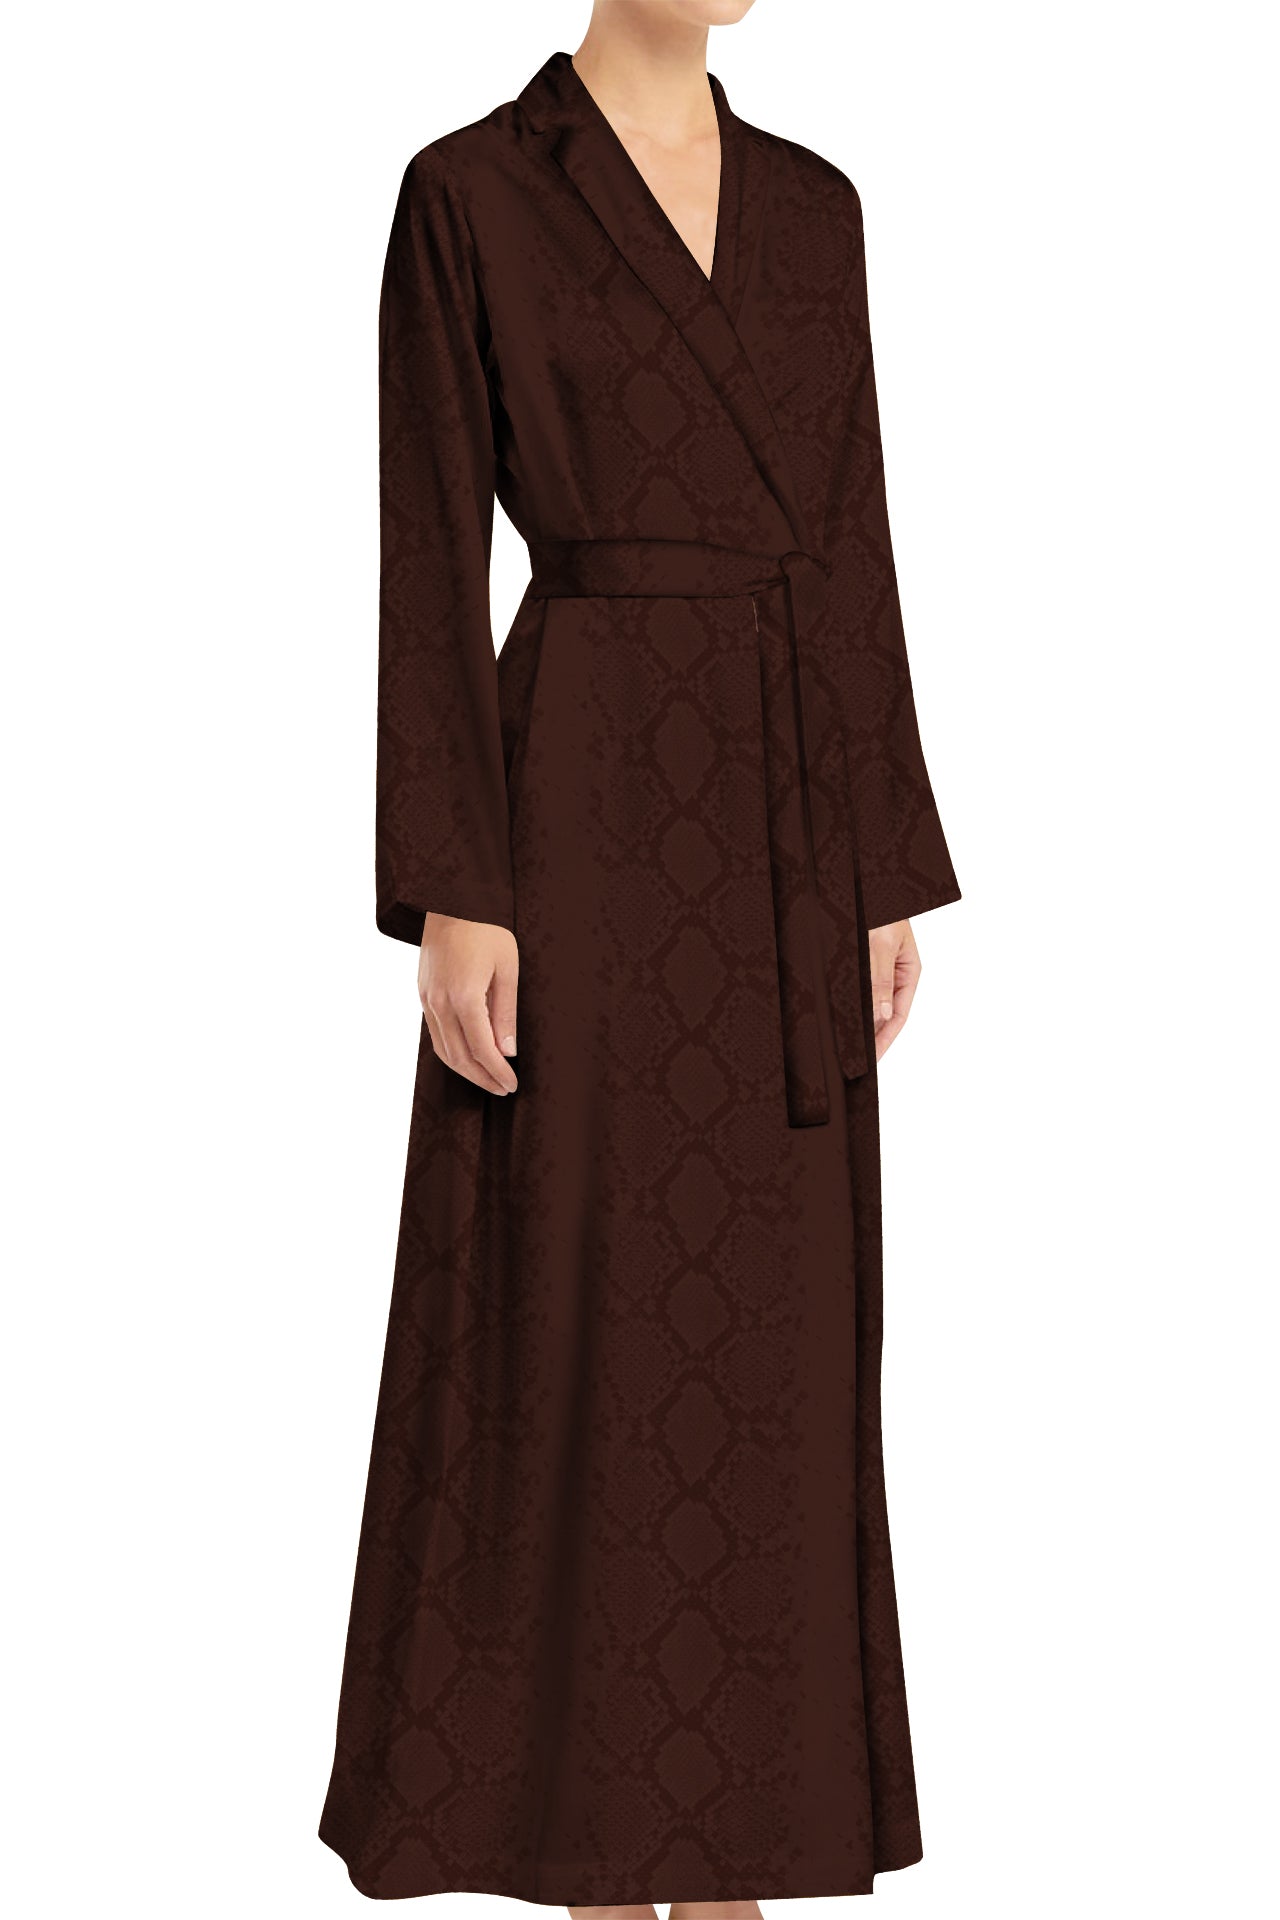  "womens brown wrap dress" "floor length wrap dress" "snakeskin dress" "Kyle X Shahida"